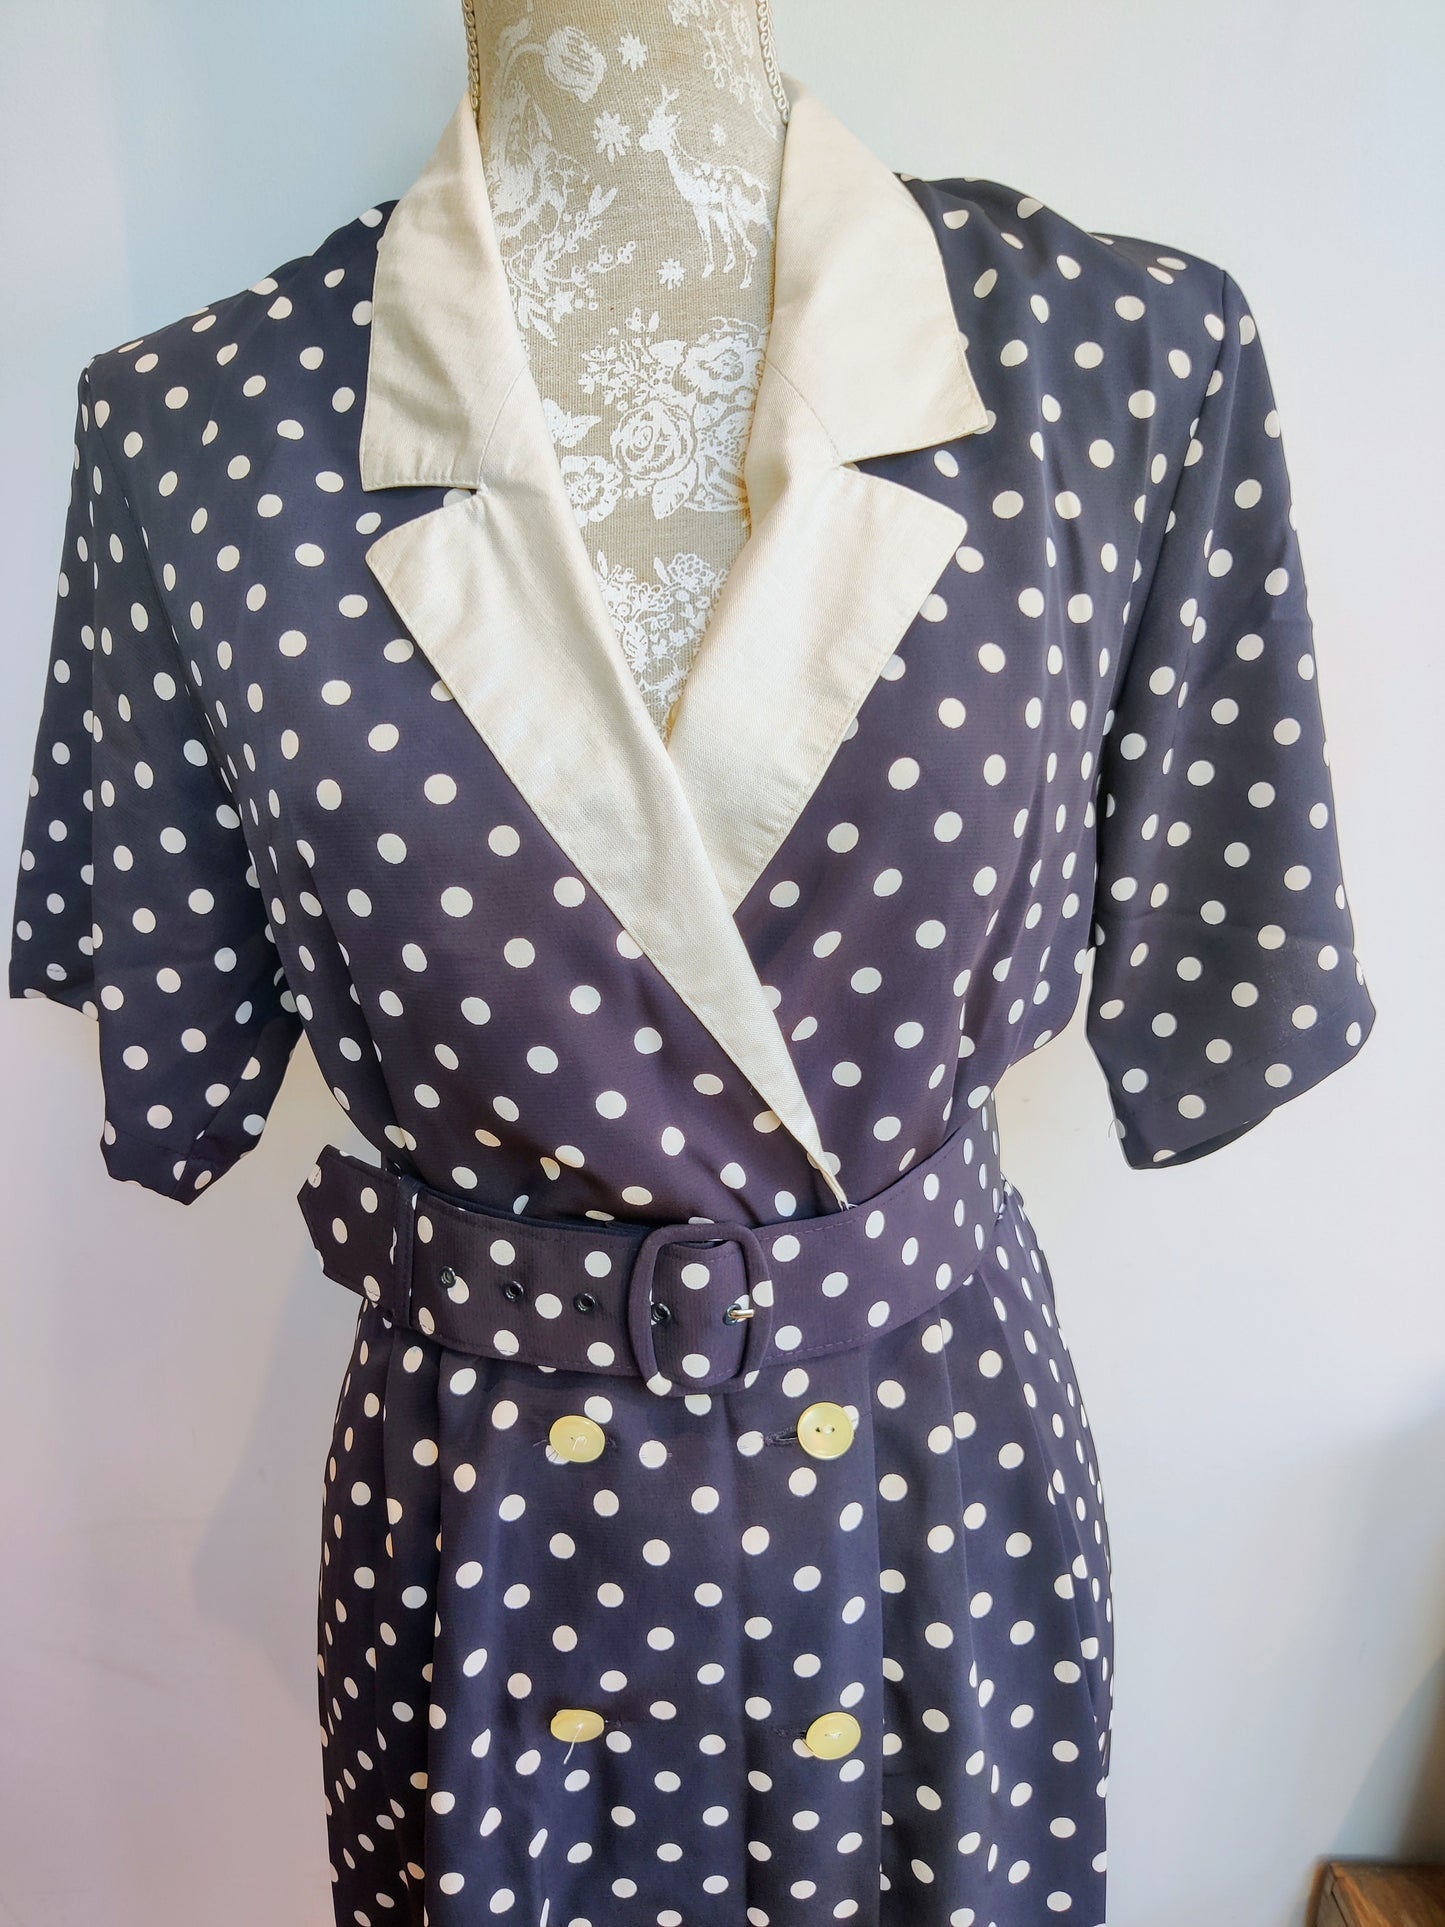 Vintage spotty dress blue and white